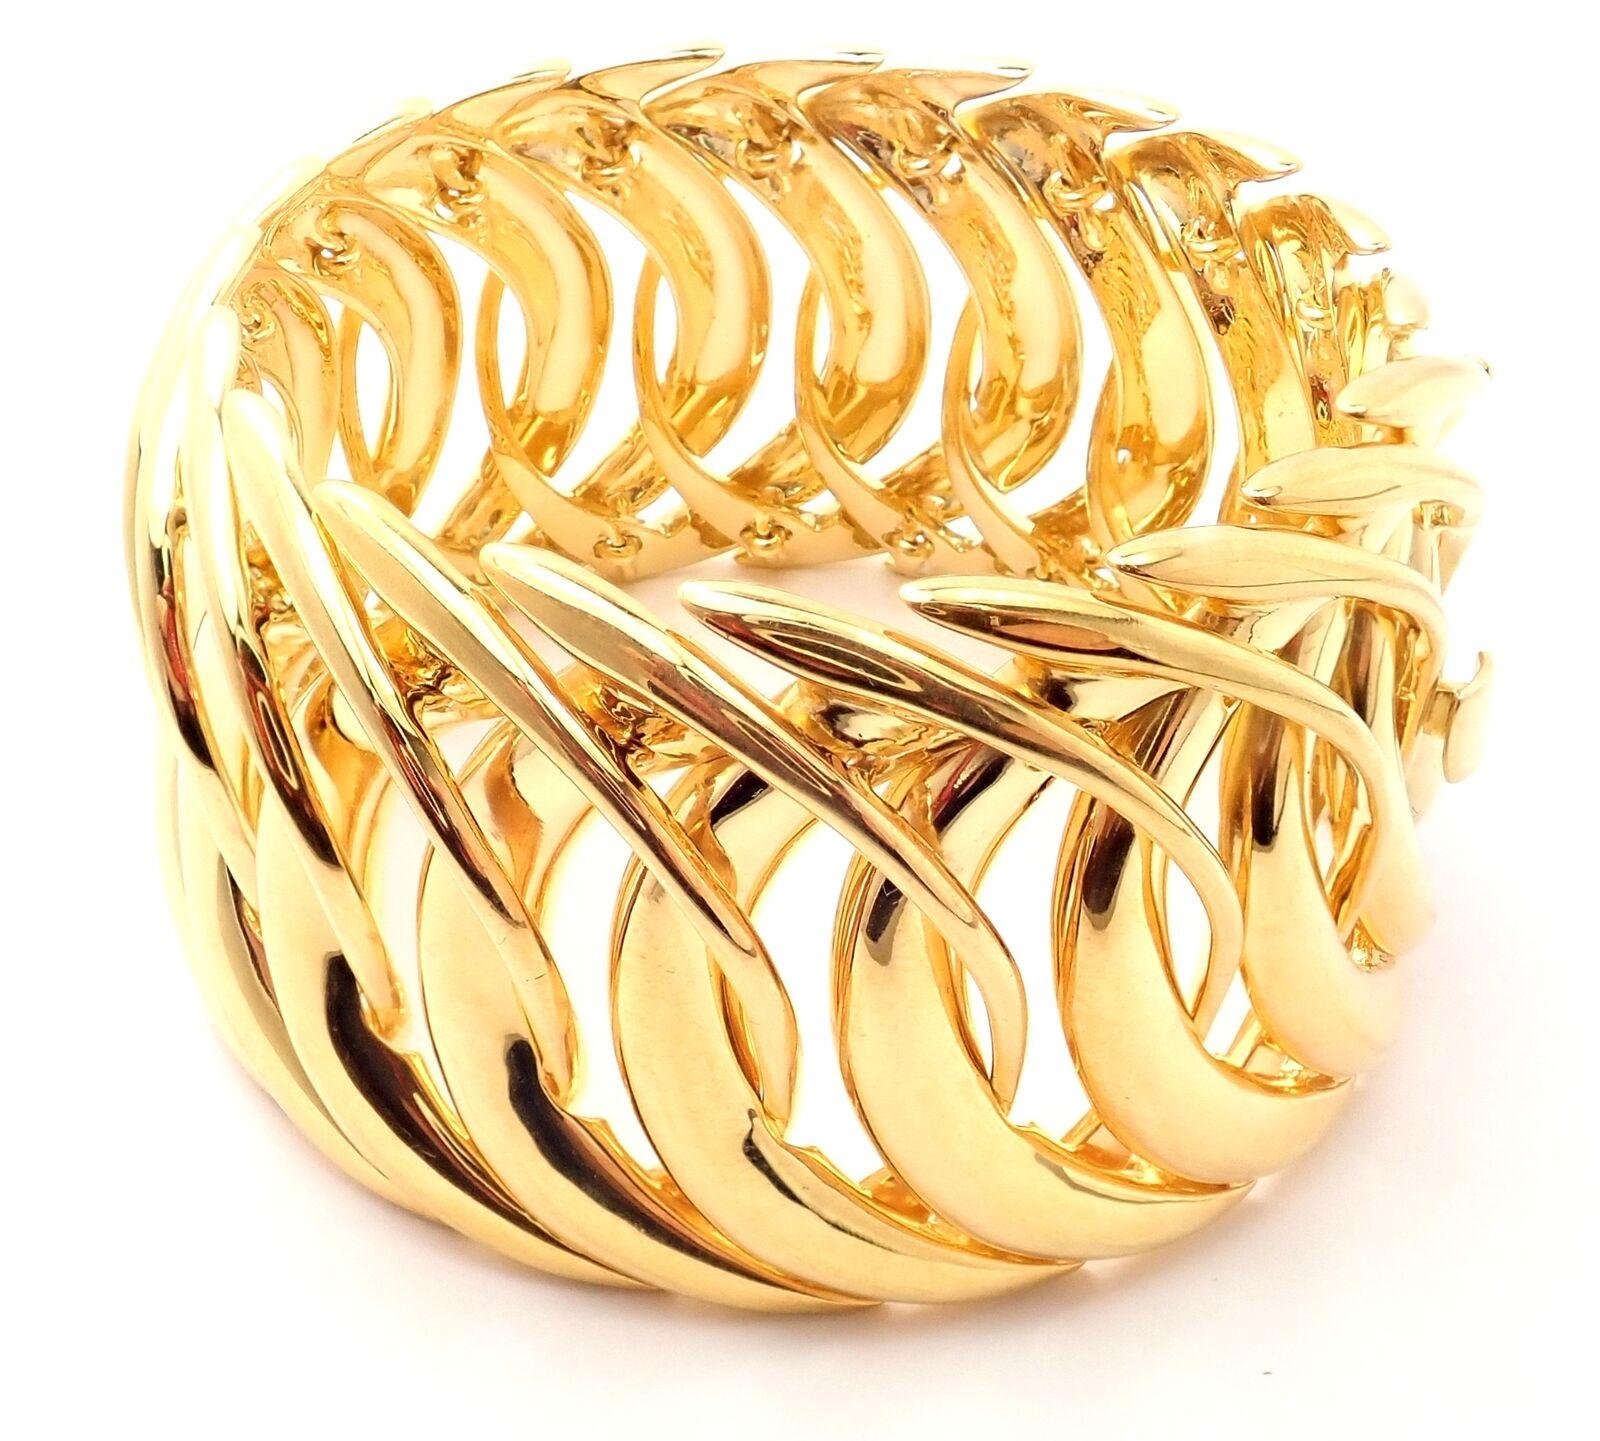 18k Yellow Gold Double Crescent Wide Bracelet by Verdura. 
Details: 
Weight: 125.5 grams
Width: 1.25